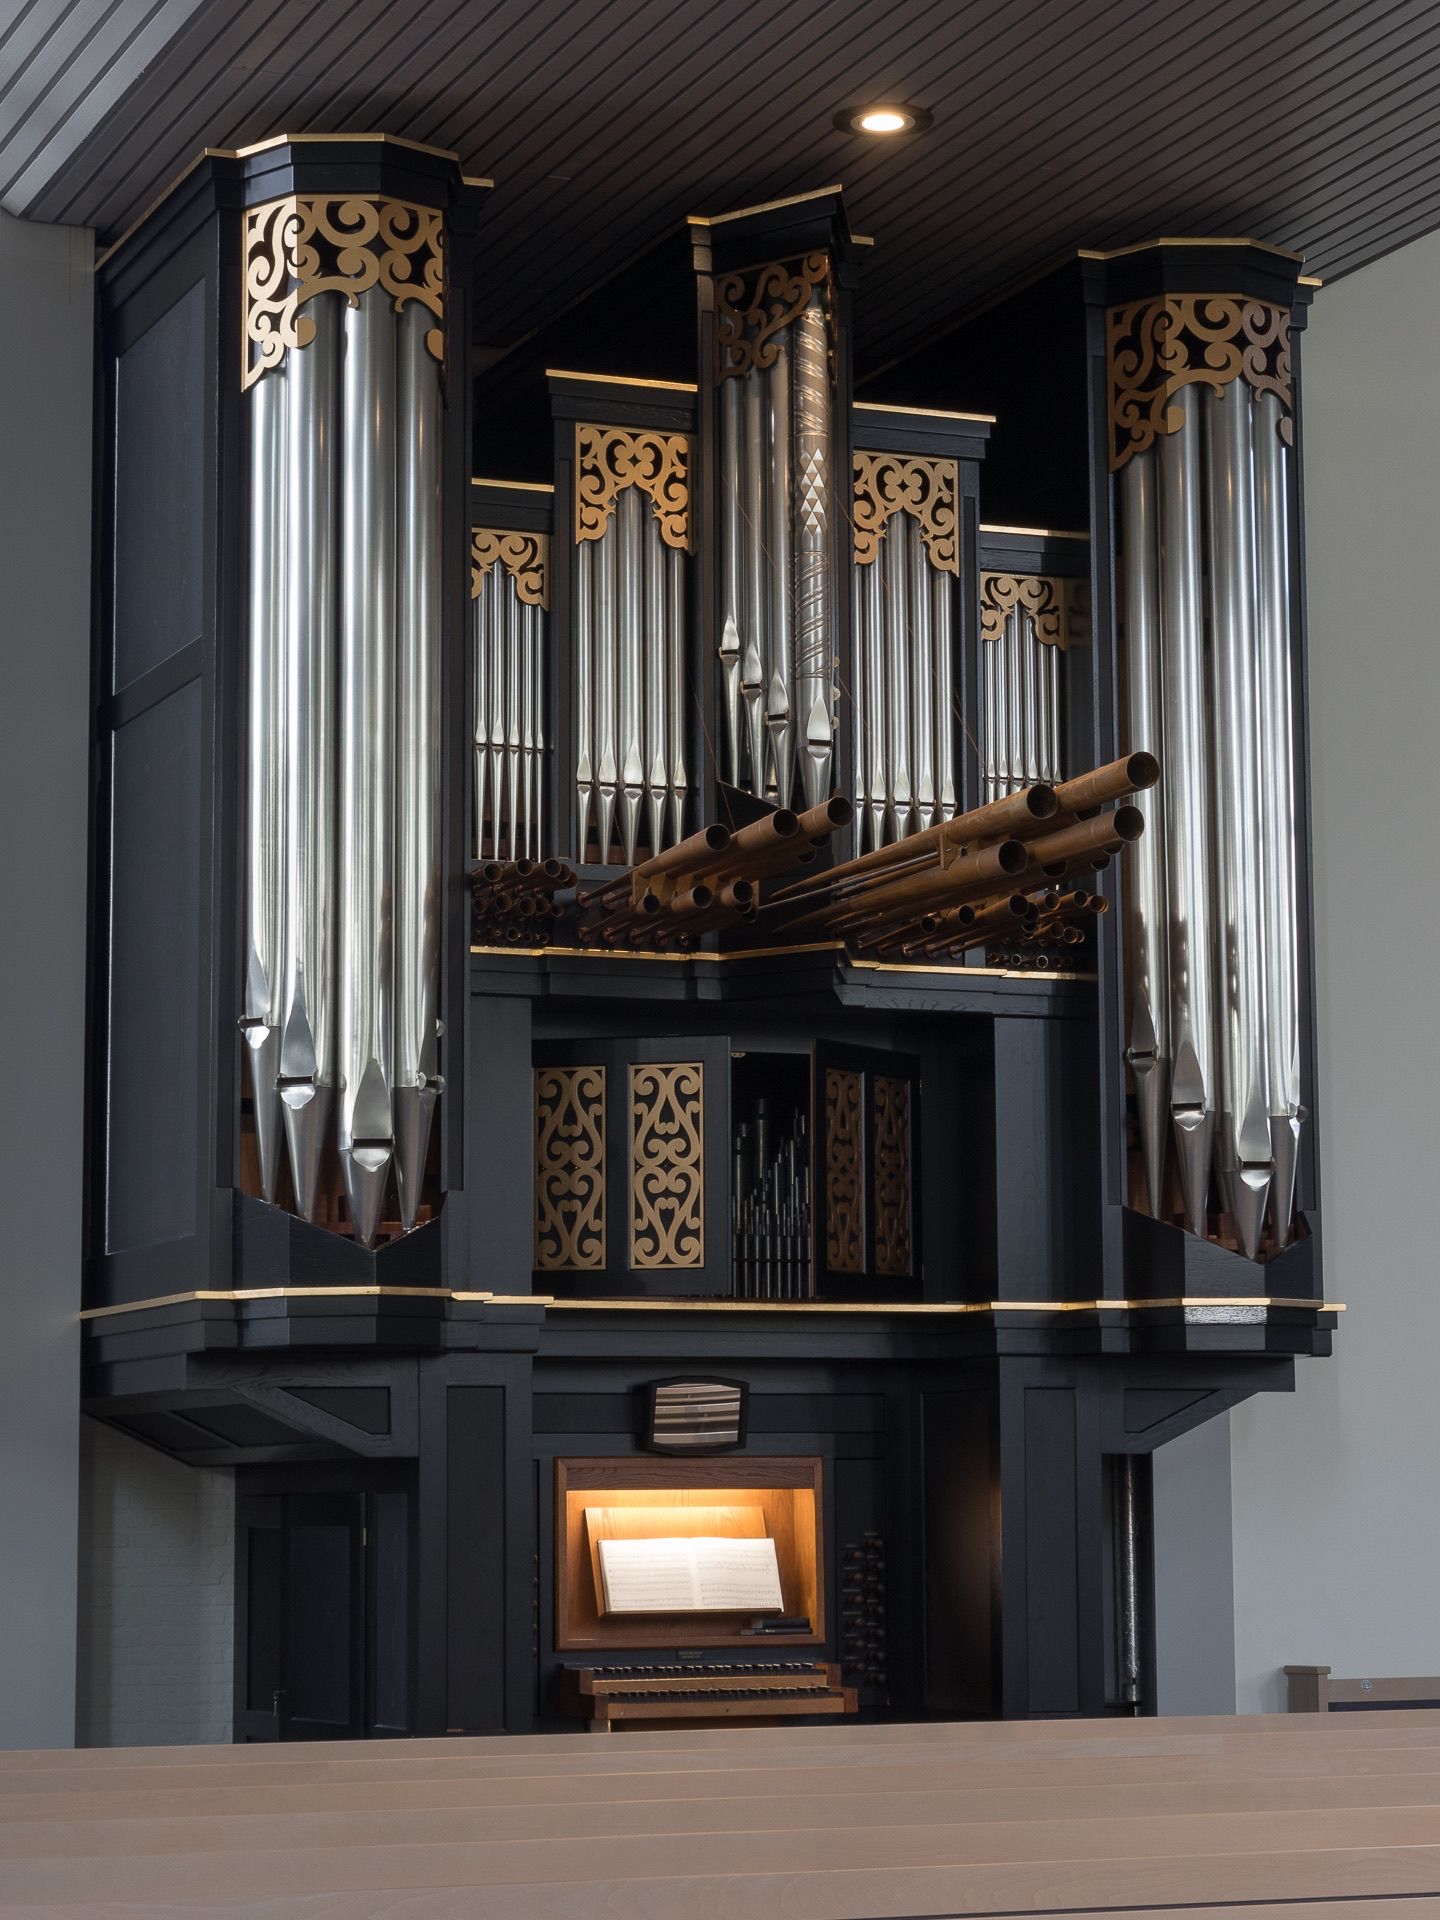 Orgel_Petrakerk_HI_Amacht_gergemhia